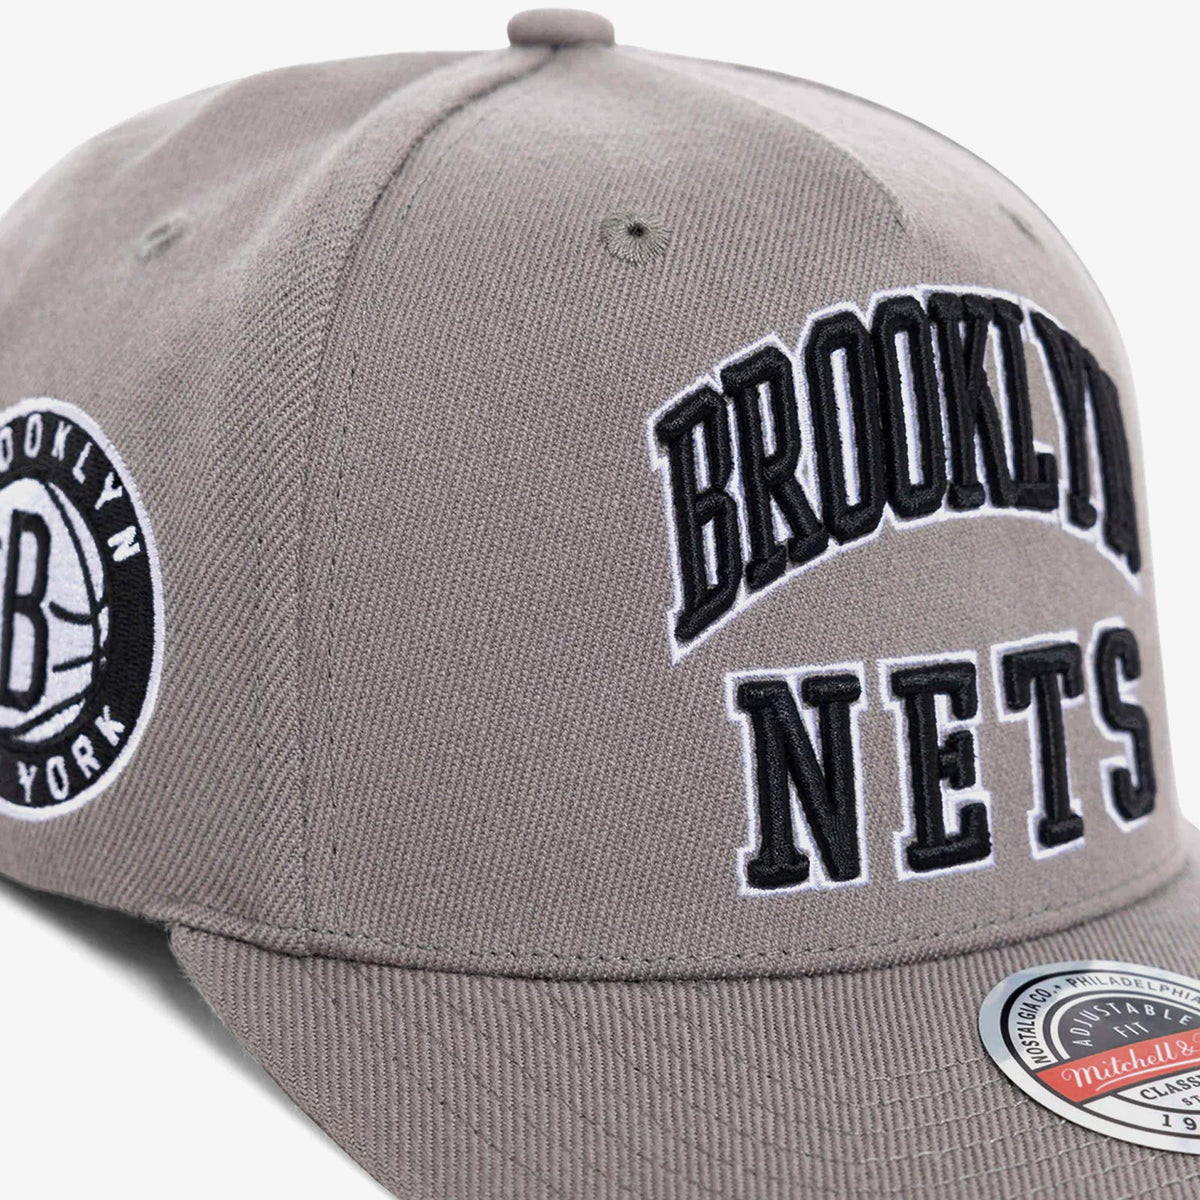 Brooklyn Nets Zone Classic Redline Snapback - Grey